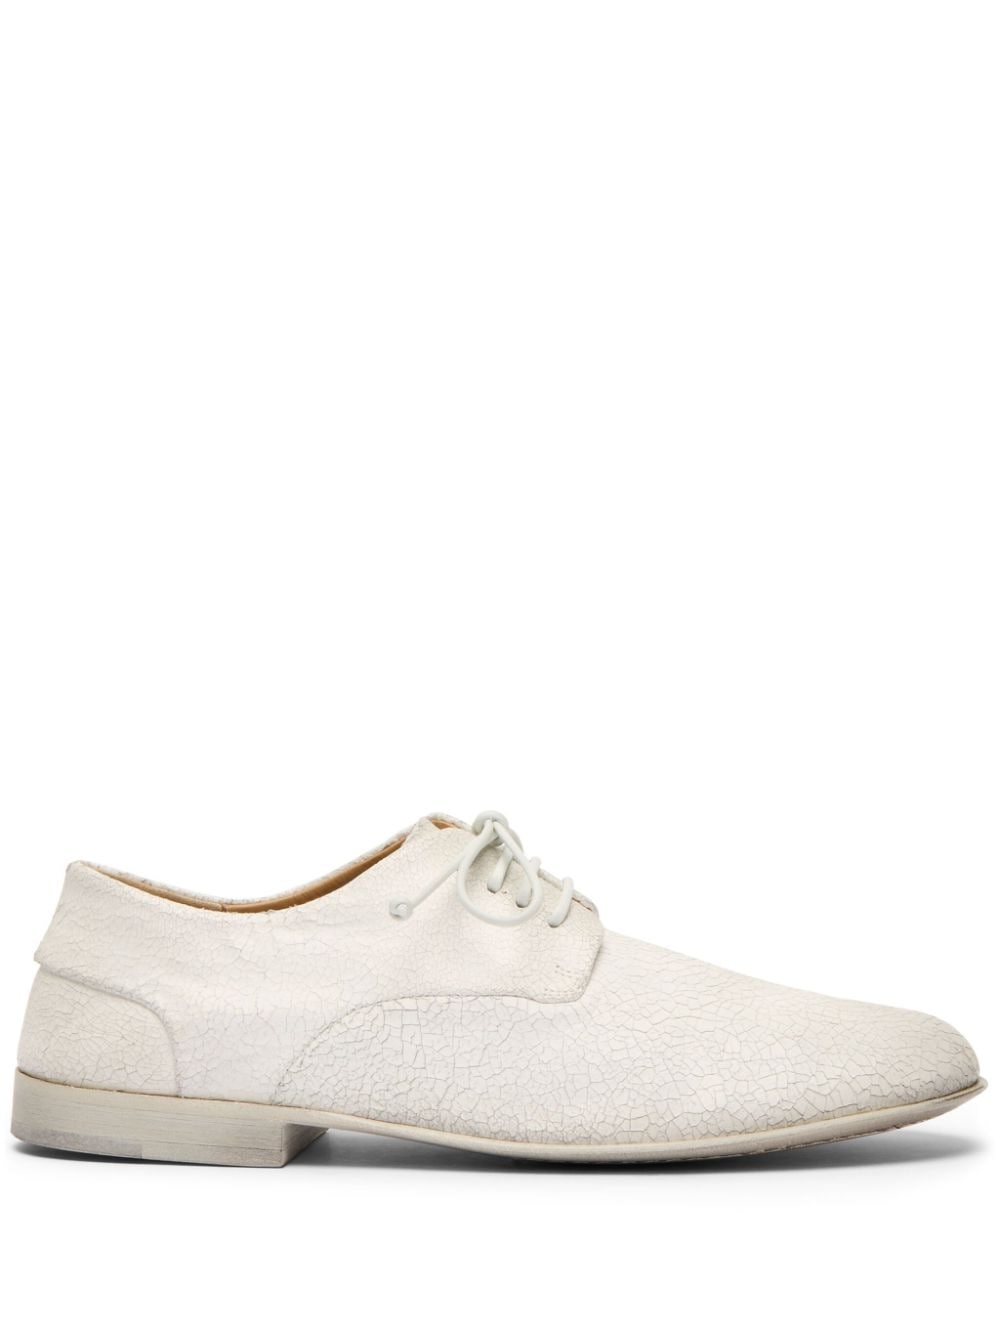 Marsèll cracked-effect leather Derby shoes - White von Marsèll